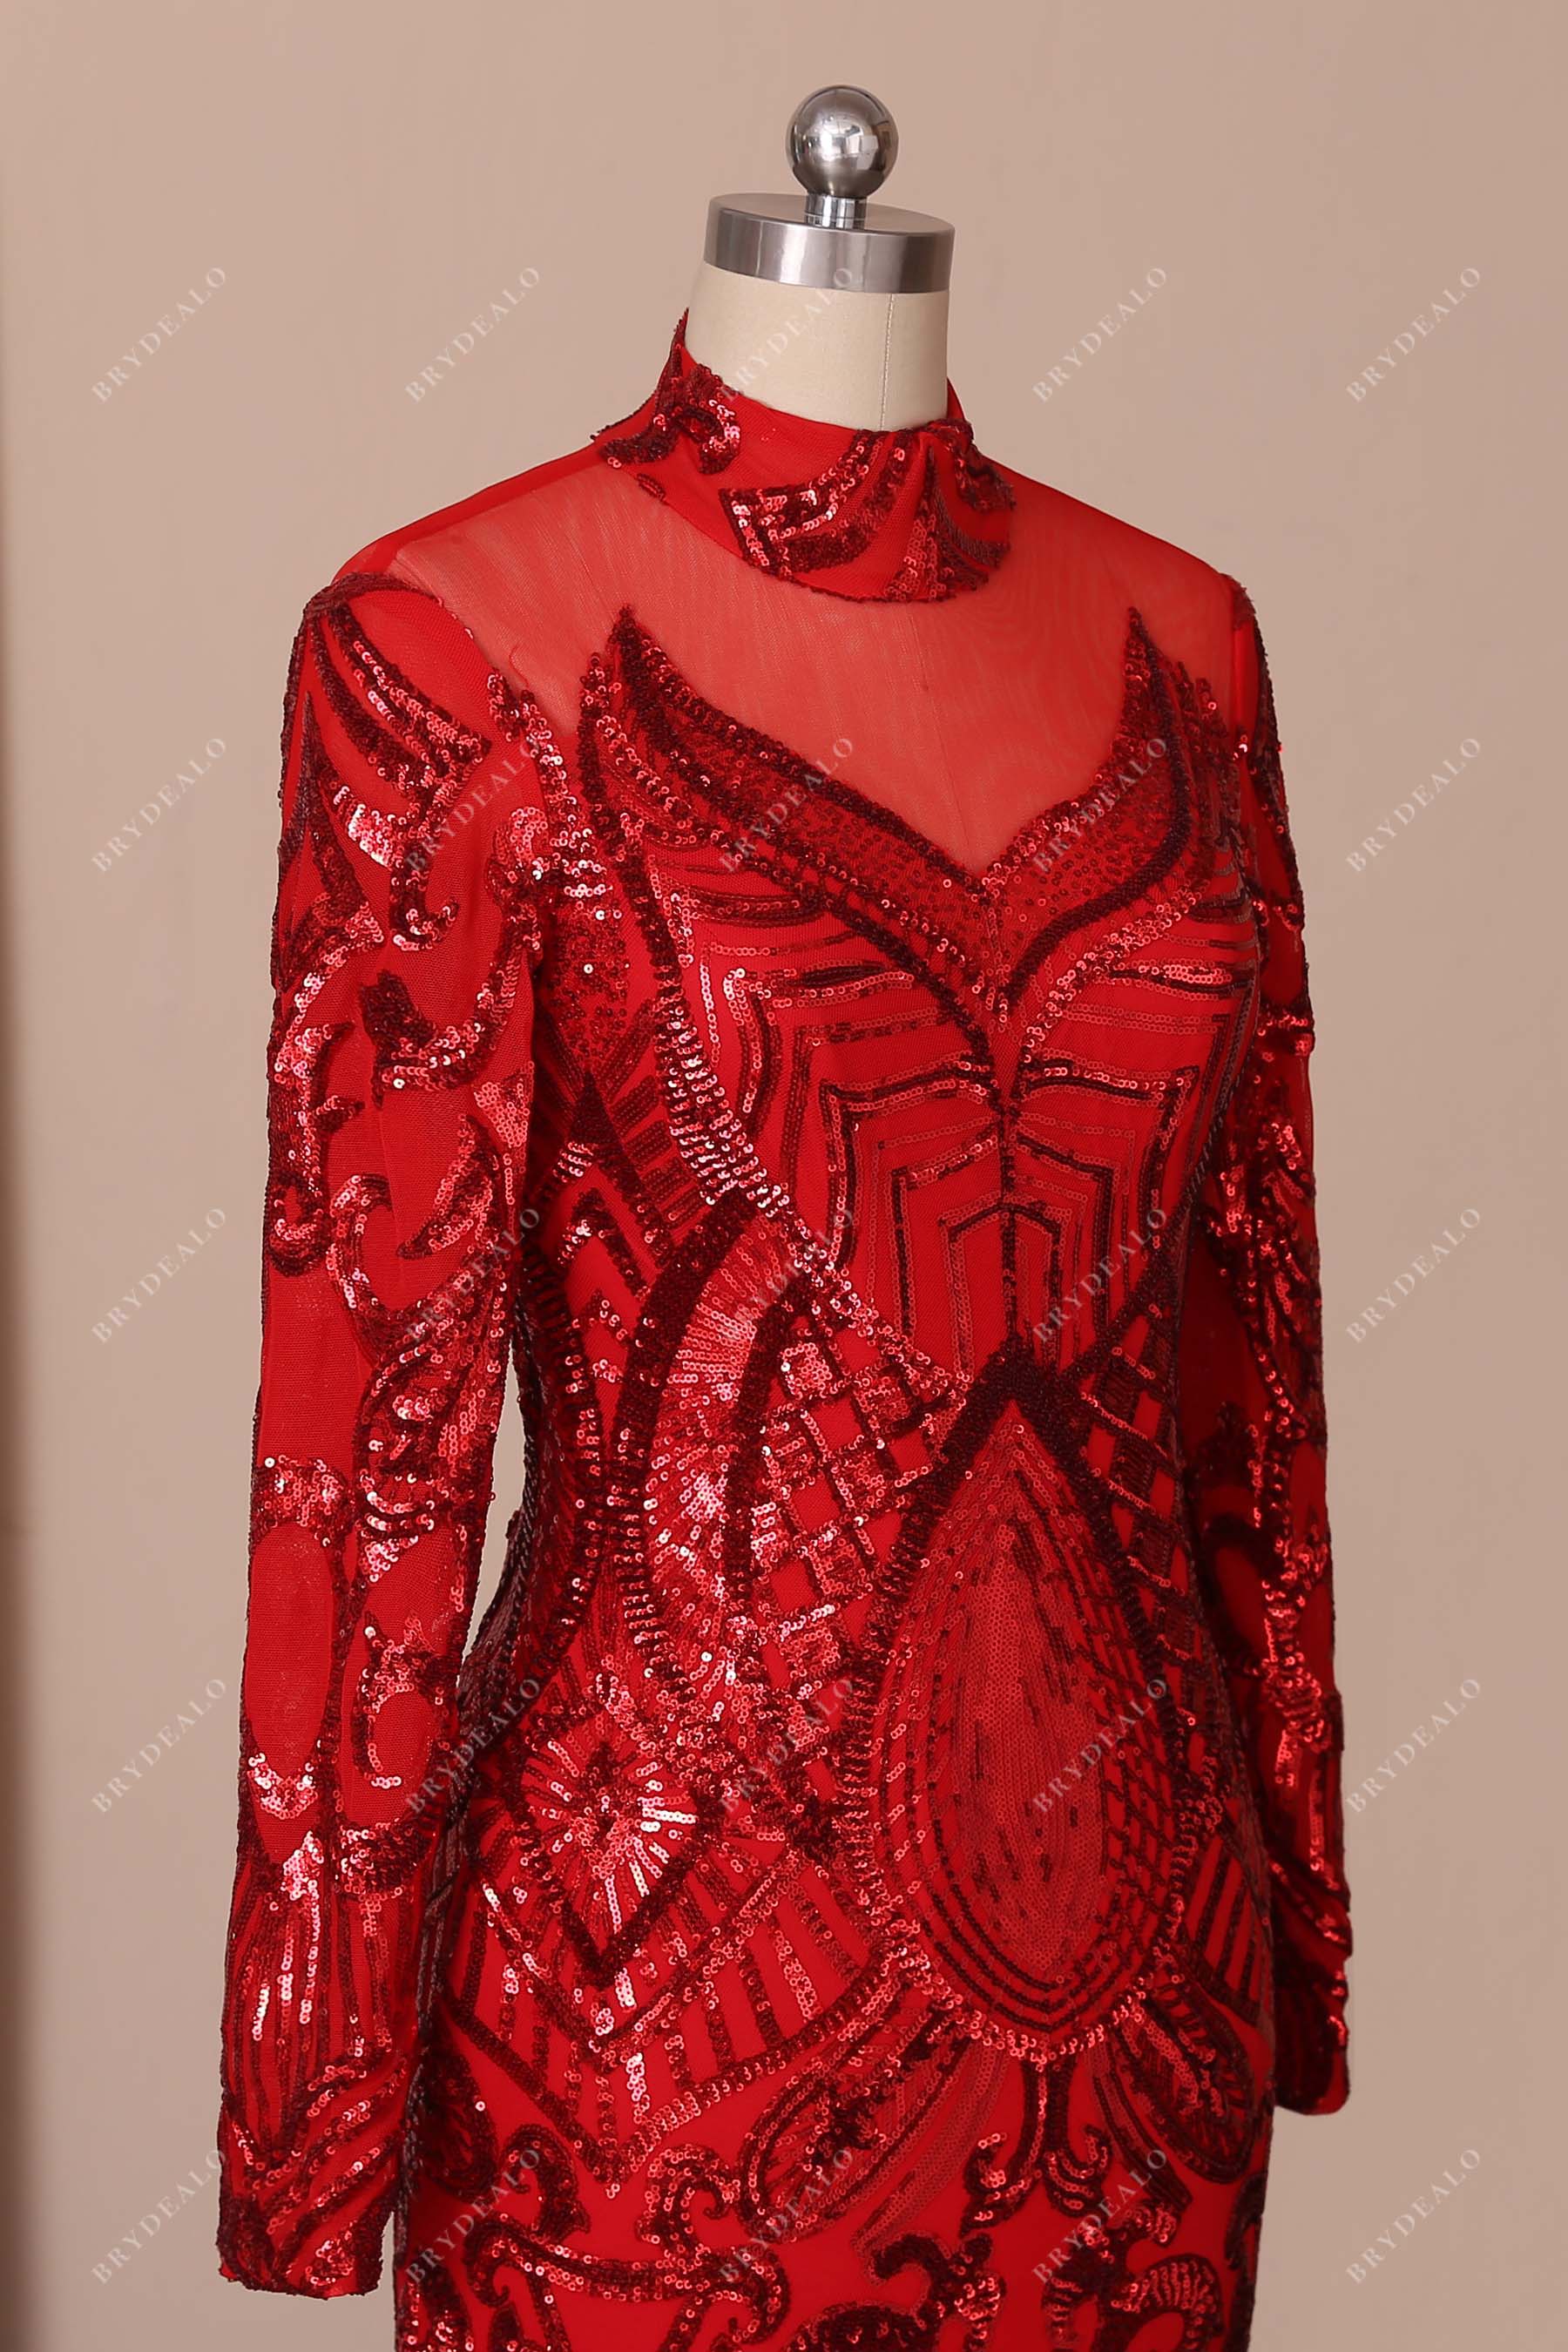 long sleeve red high neck dress